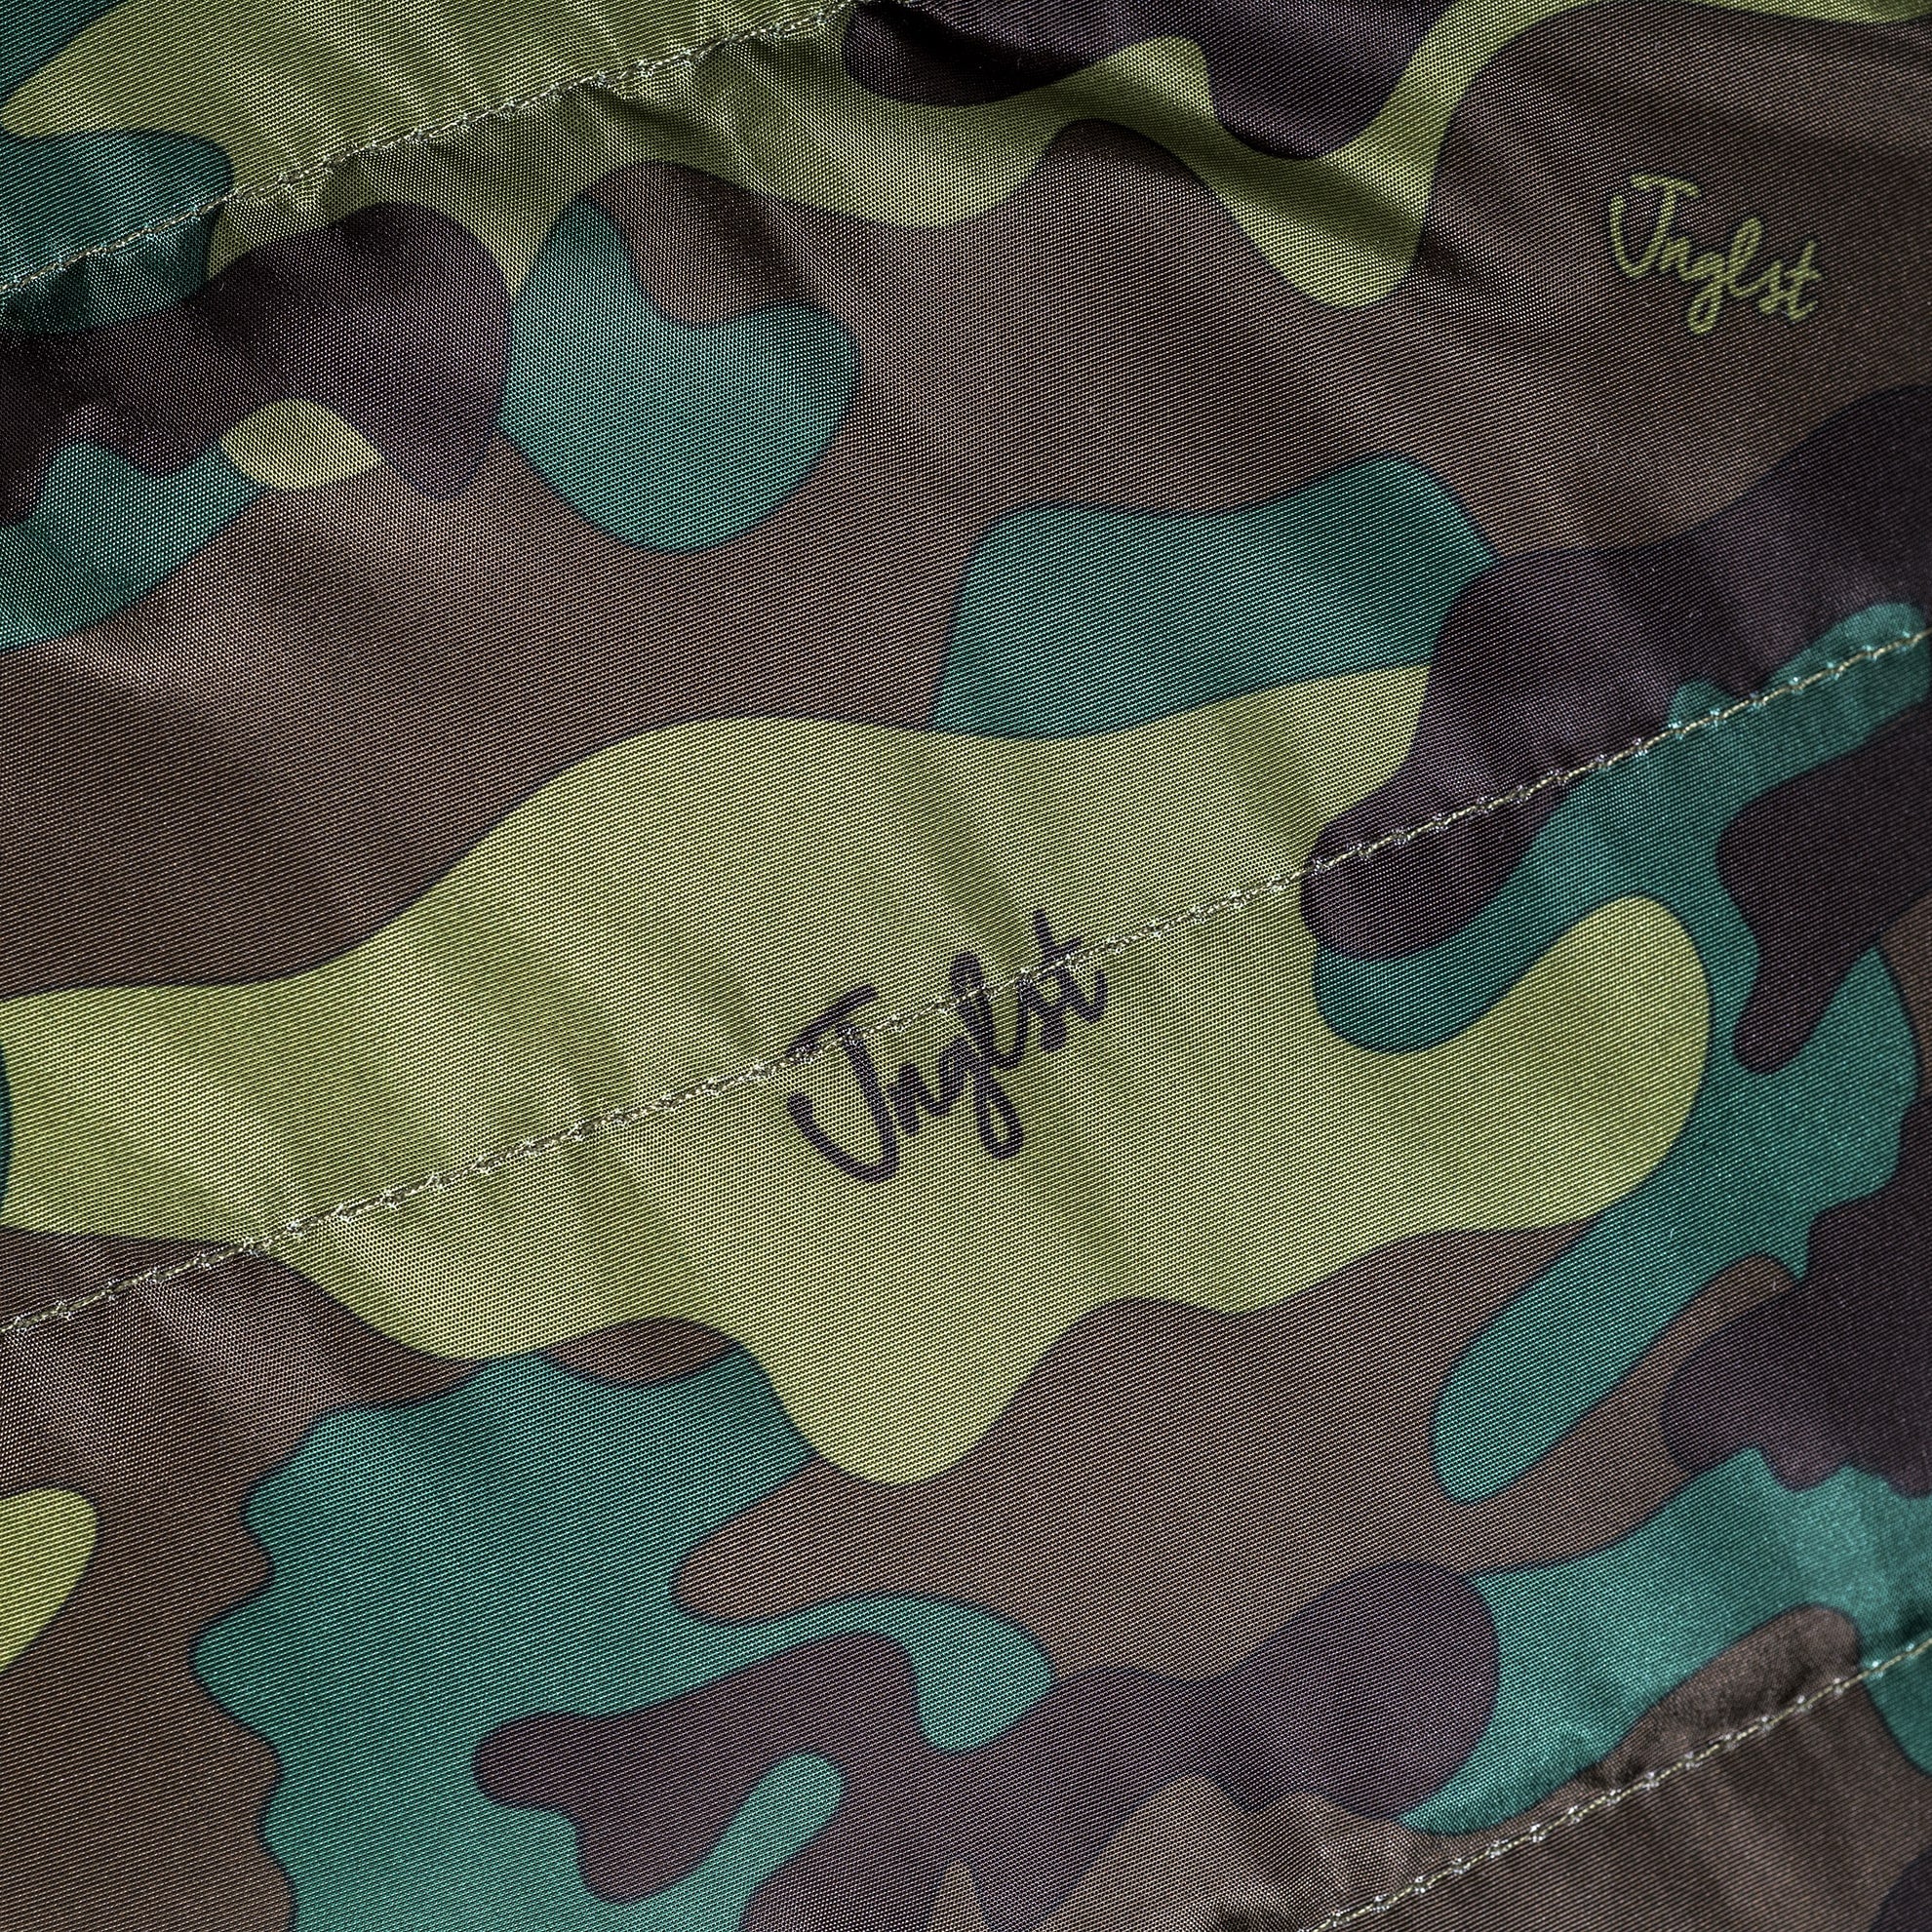 Waterproof Fabric on our Camo Body Warmer